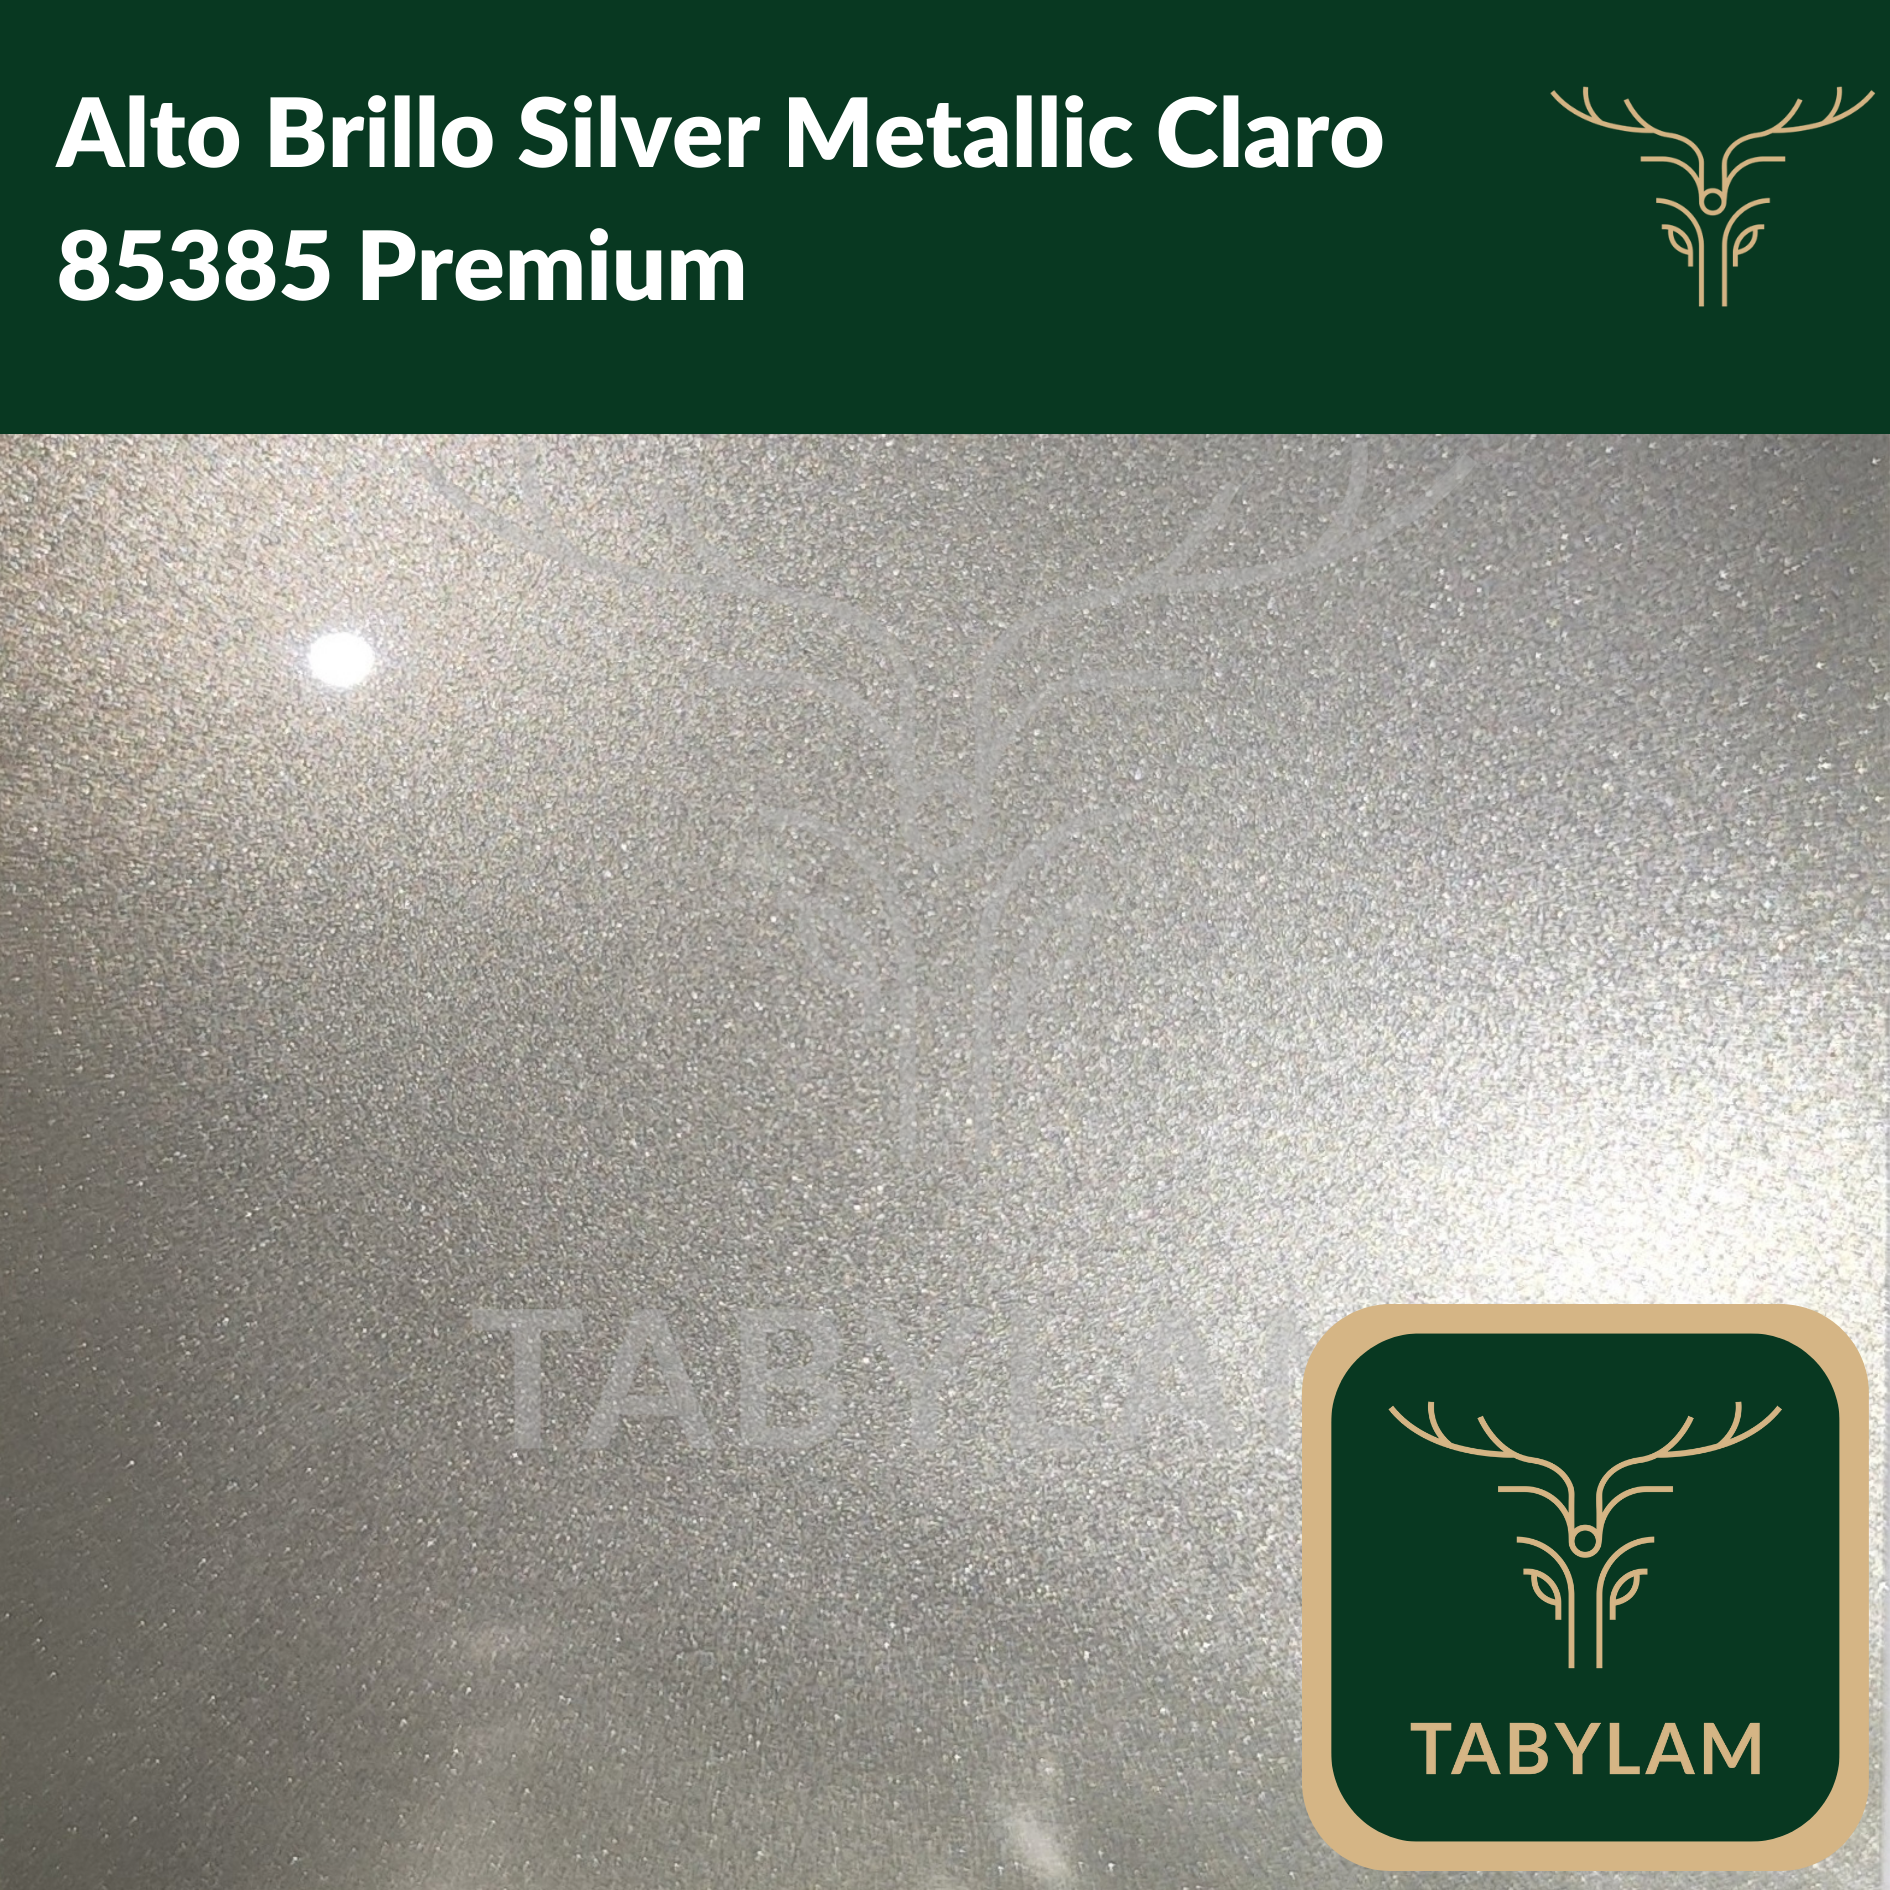 Tablero Metallic Alto Brillo Acrílico Premium 1800 - Tabylam